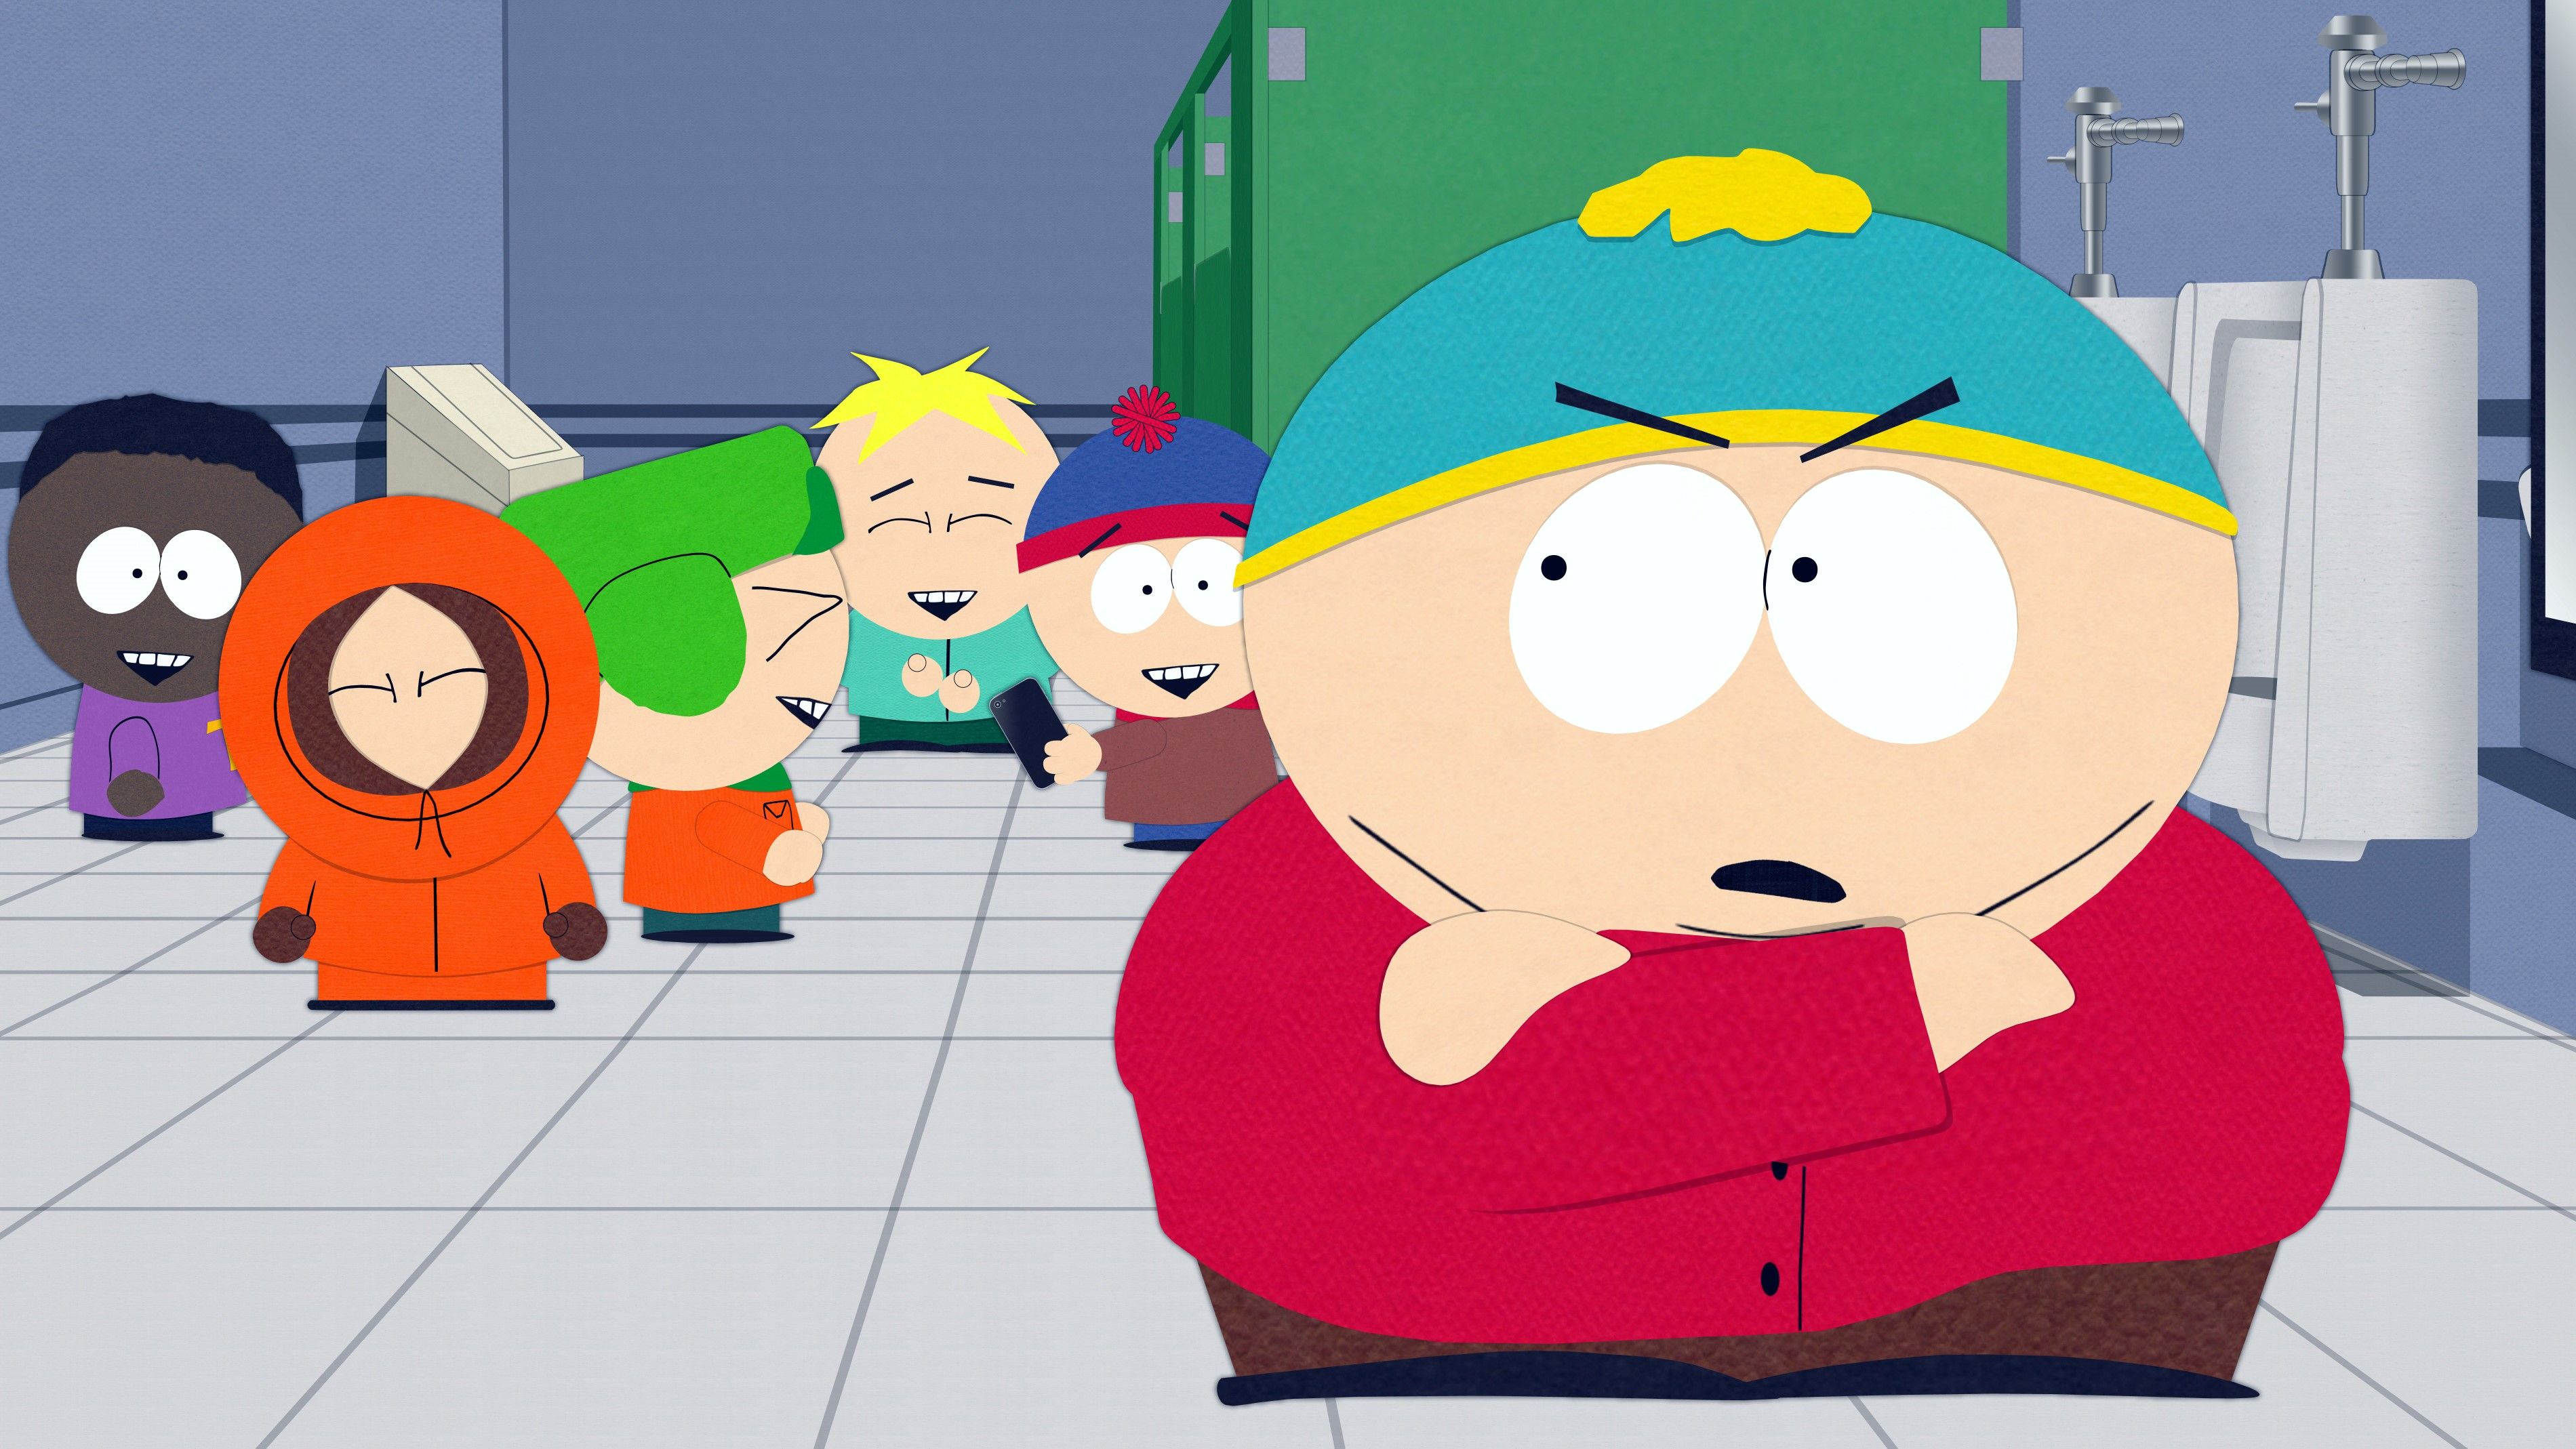 'South Park' boys laugh at Cartman in the bathroom